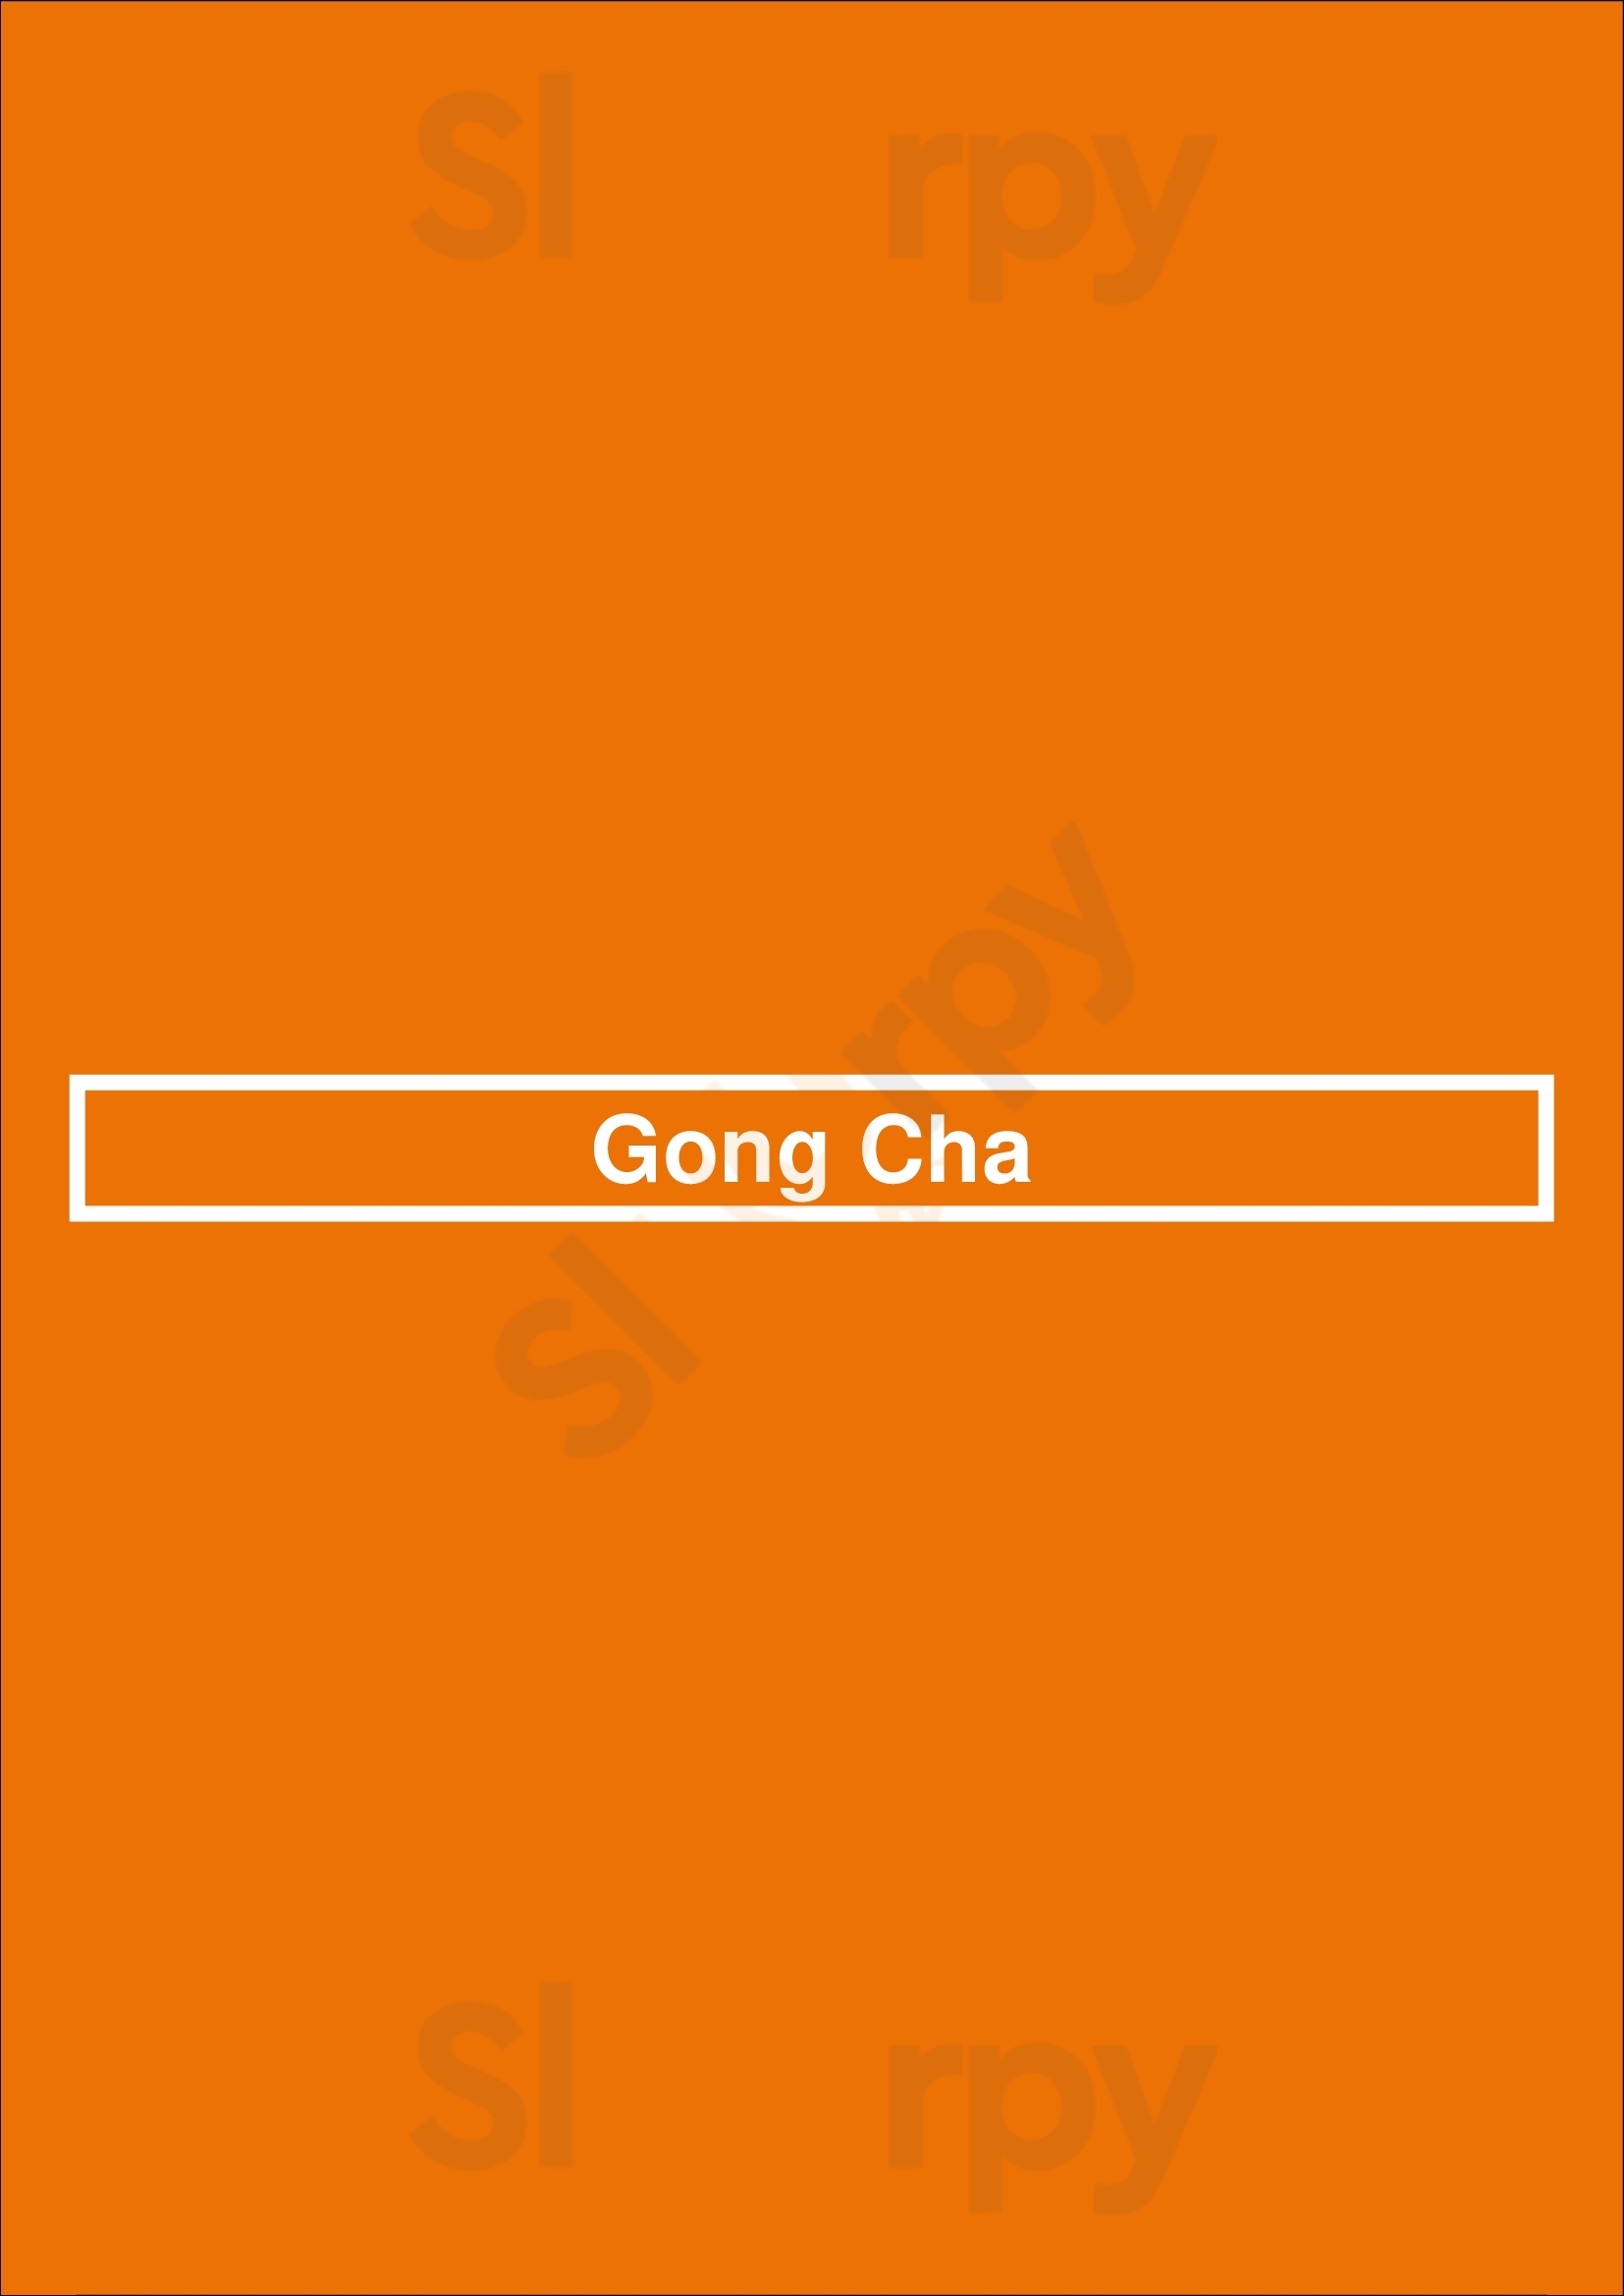 Gong Cha Edmonton Menu - 1